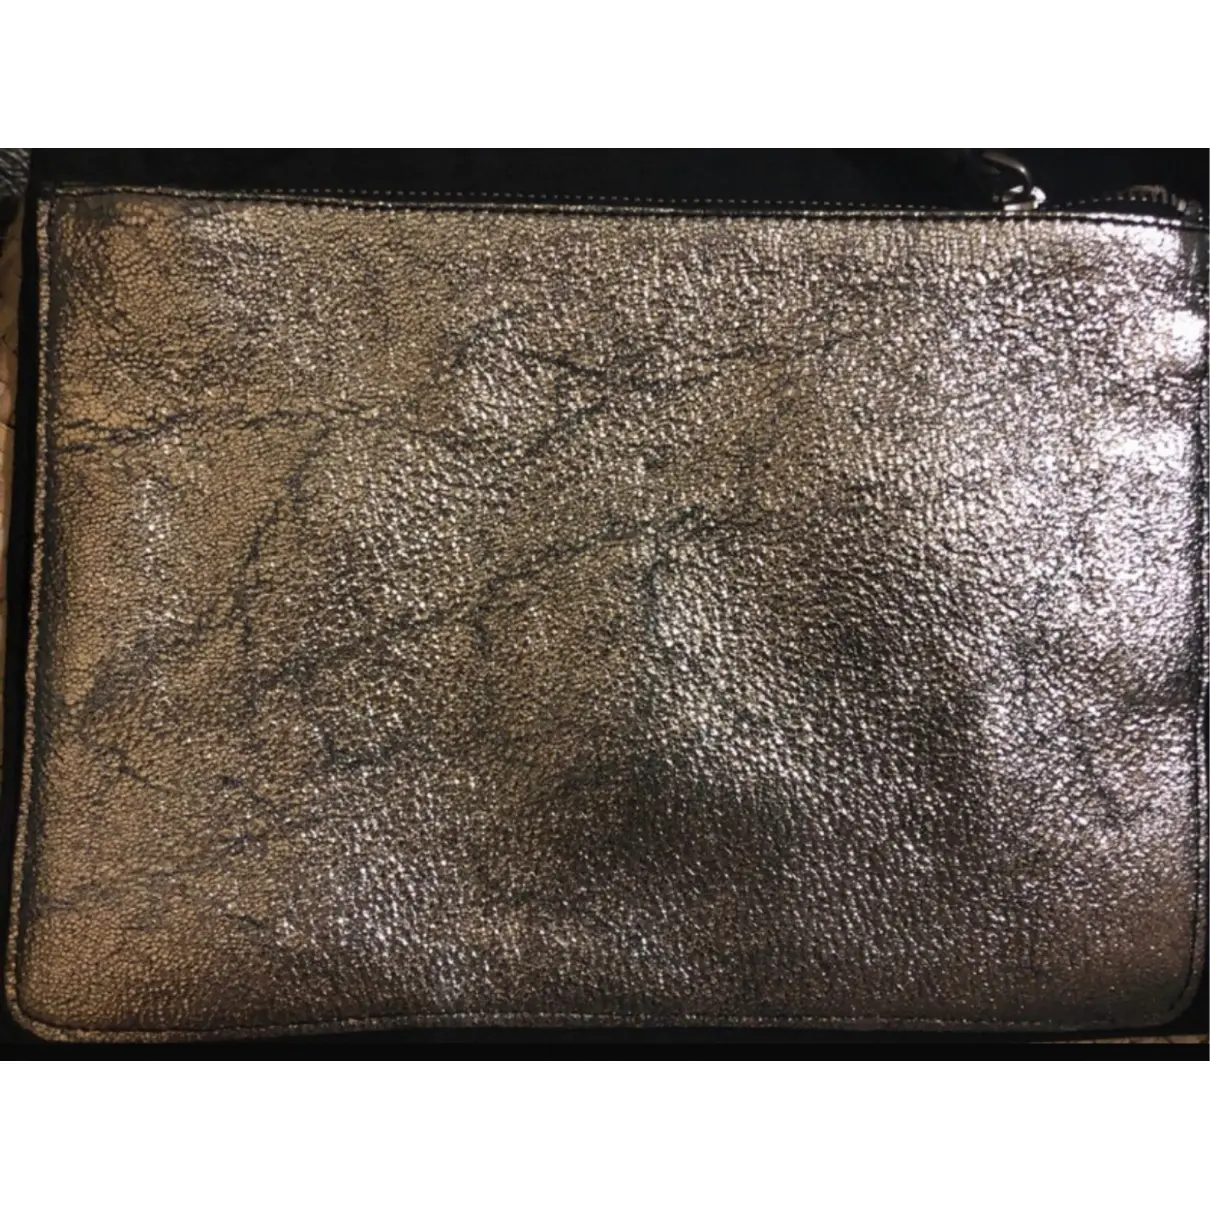 Buy Jerome Dreyfuss Popoche leather clutch bag online